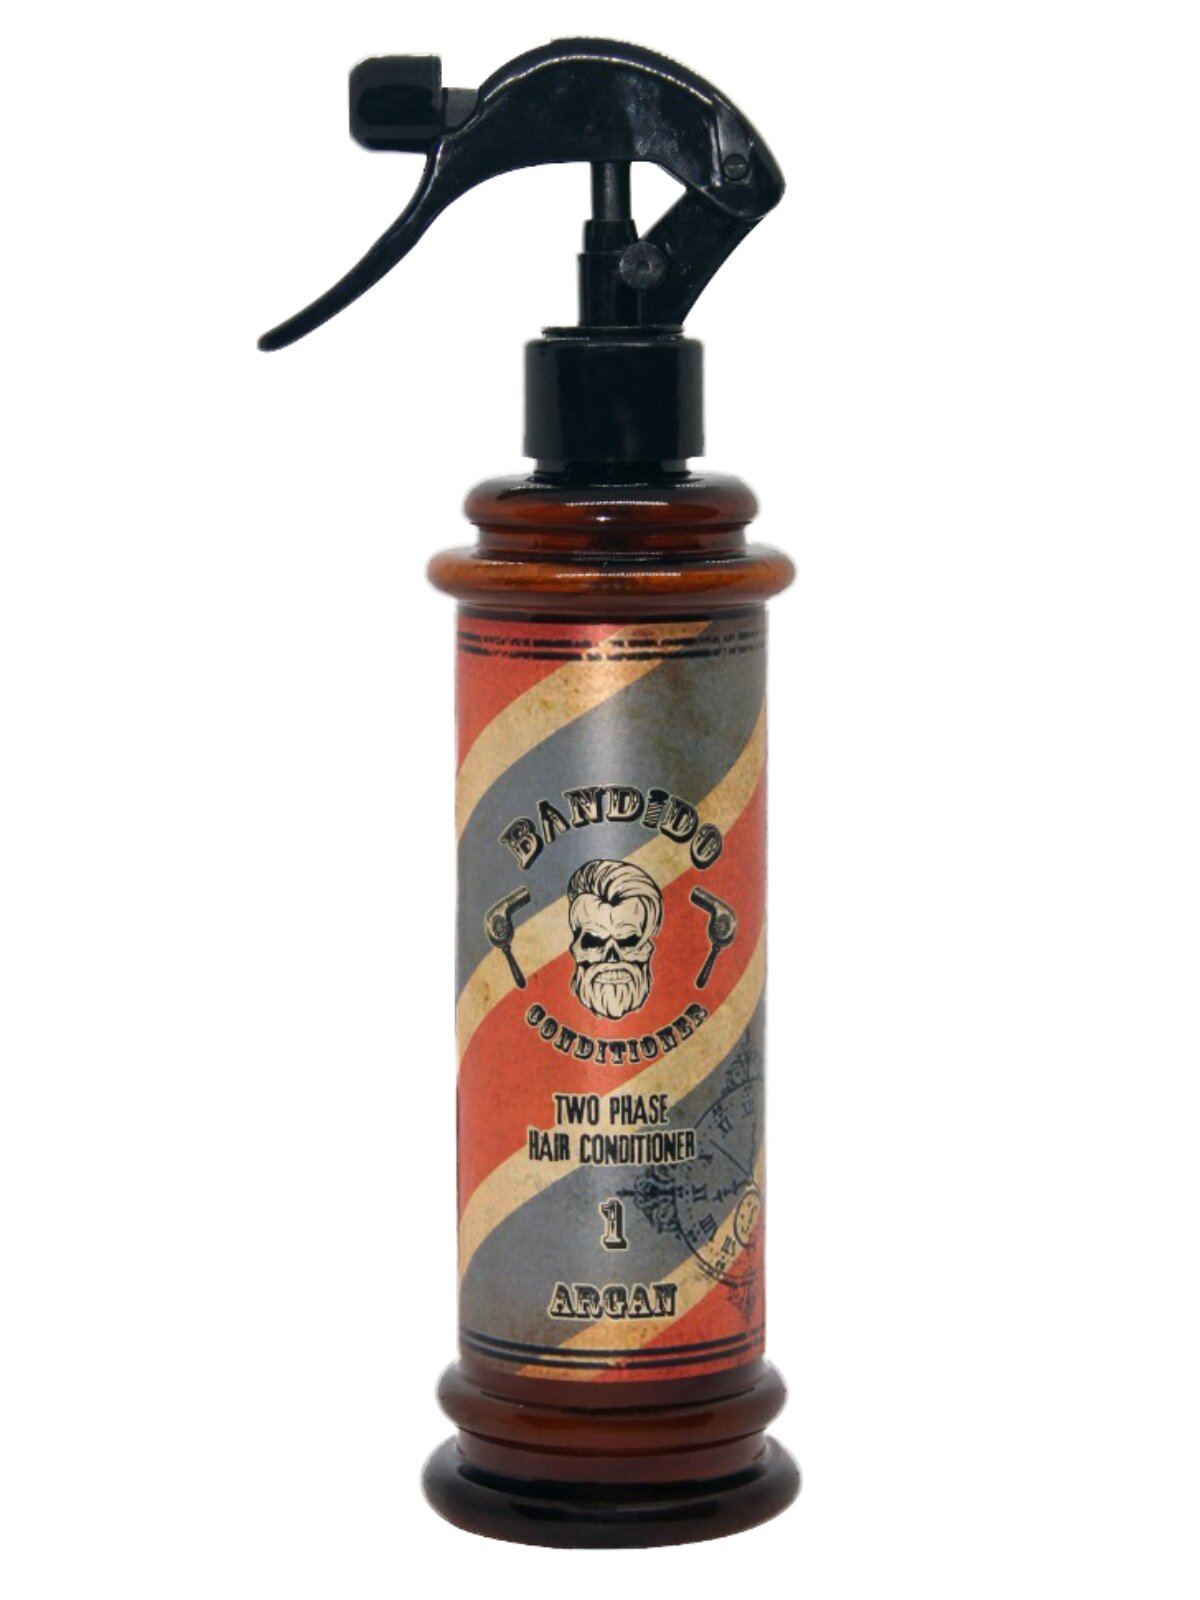 Bandido Argan - Zwei-Phasen-Haarspülung 350 ml